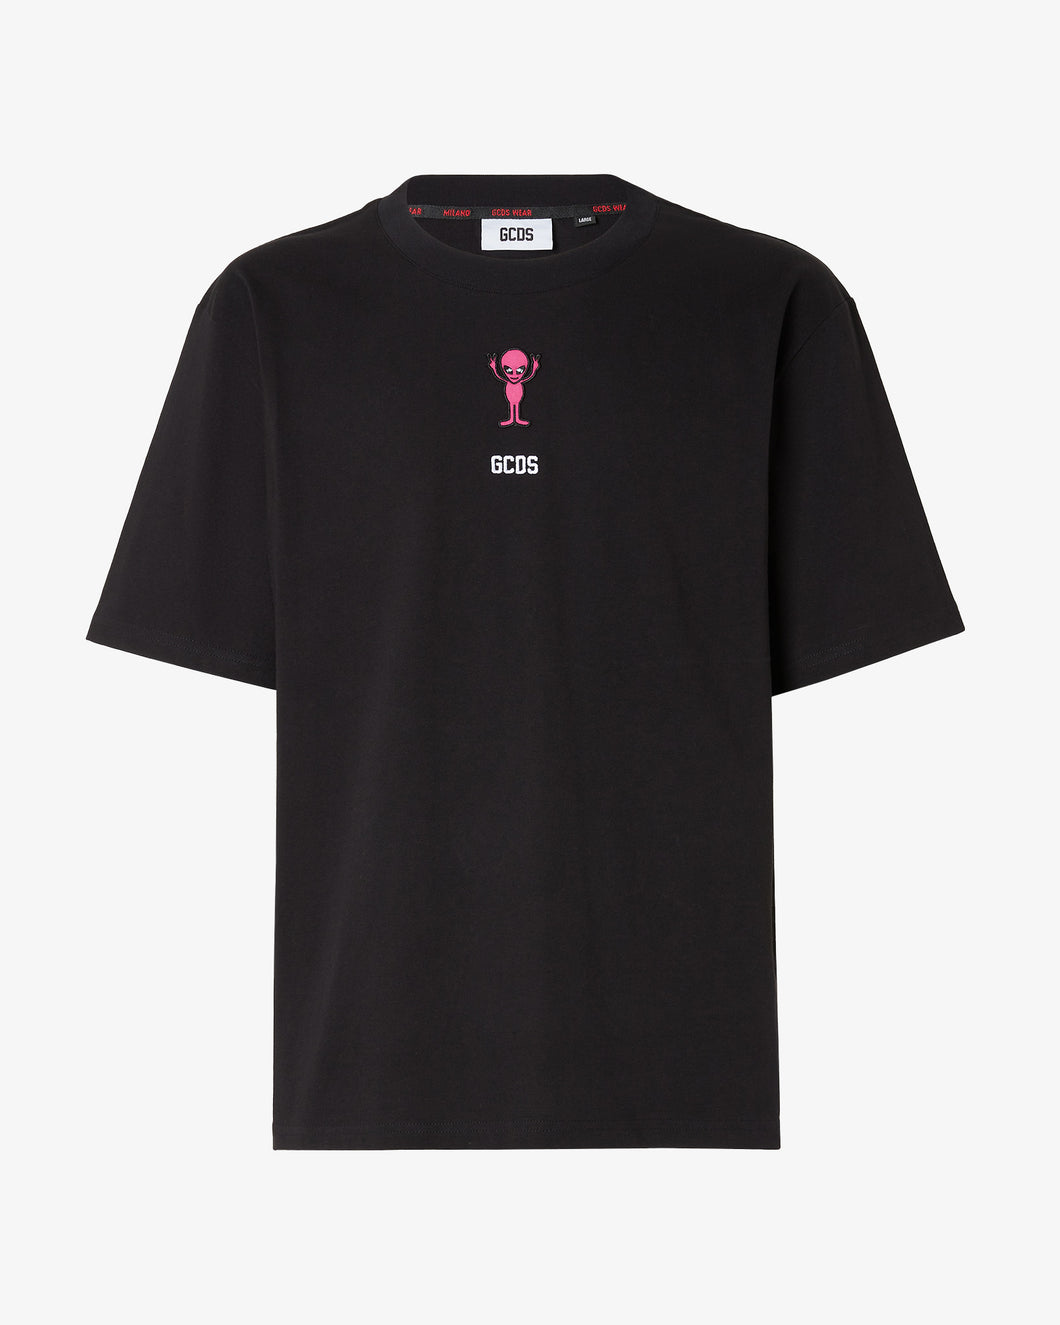 Wirdo Win Regular T-Shirt | Men T-shirts Black | GCDS®